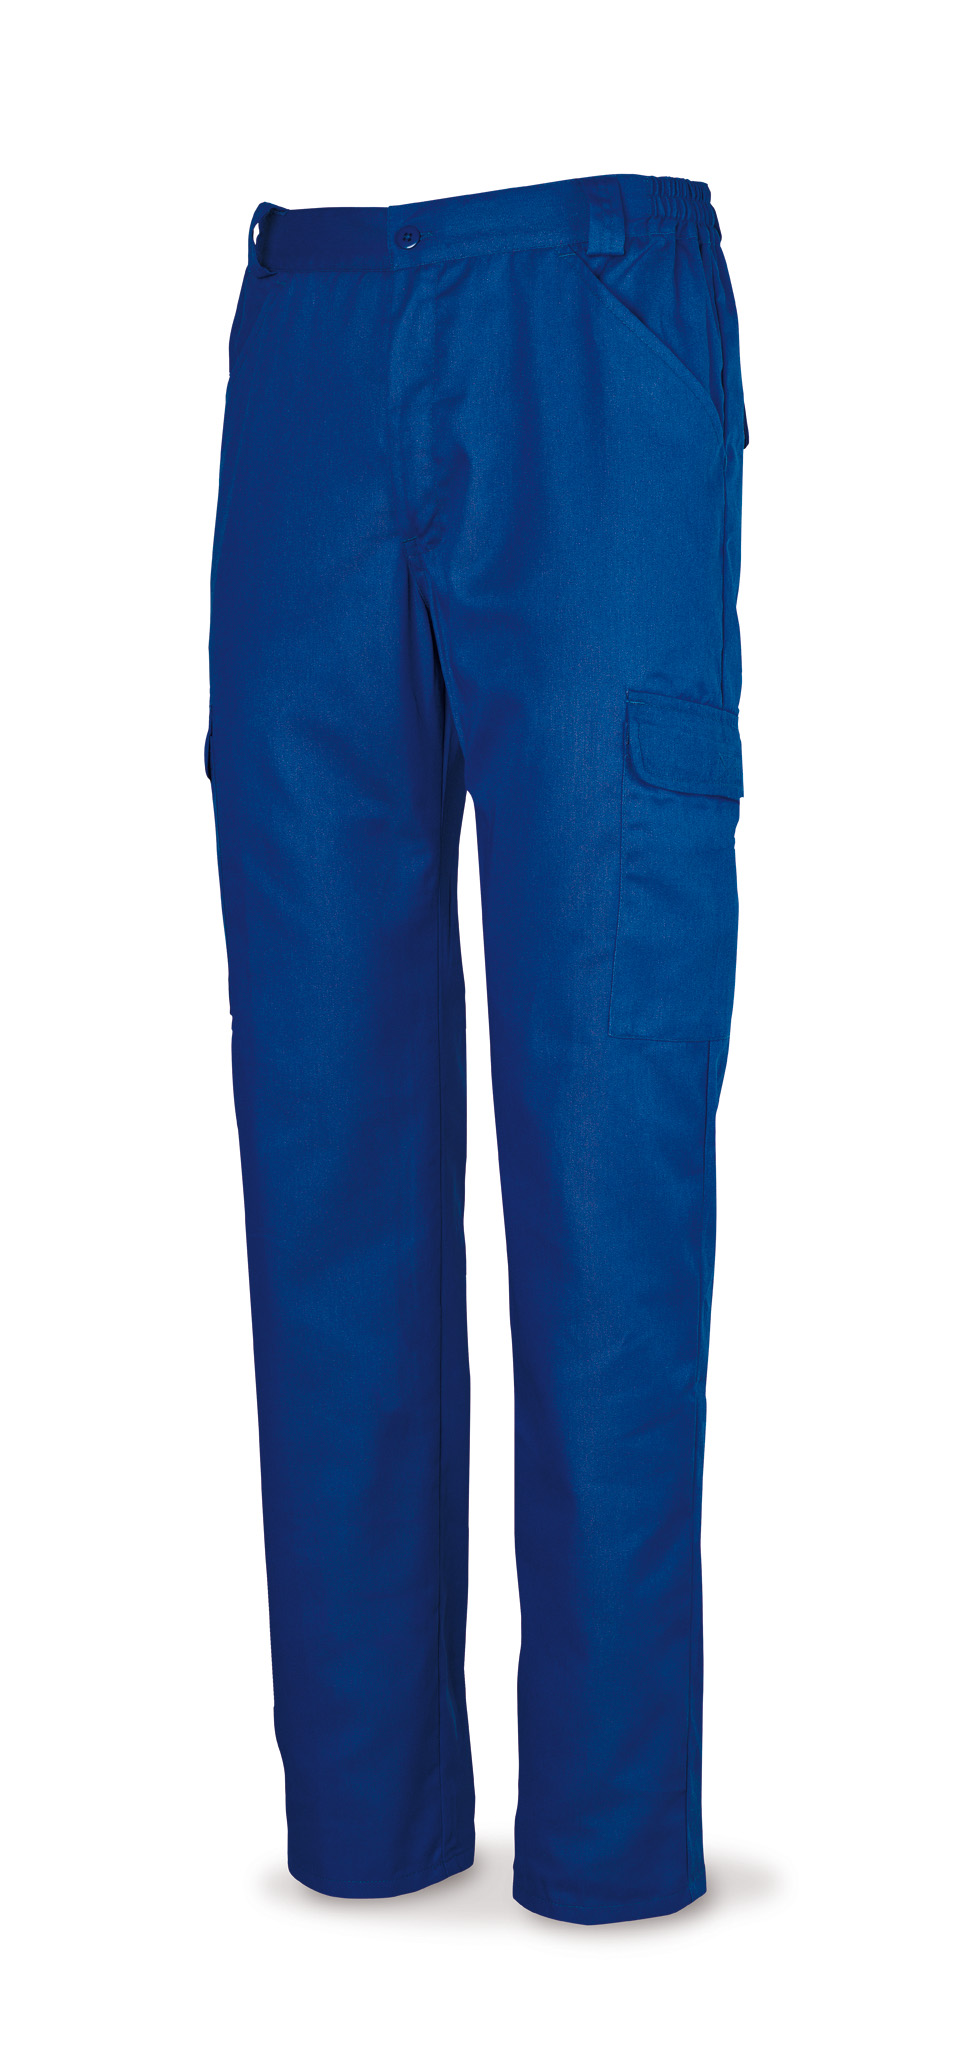 388-PE Workwear Basic Line 100% Cotton. Royal blue.